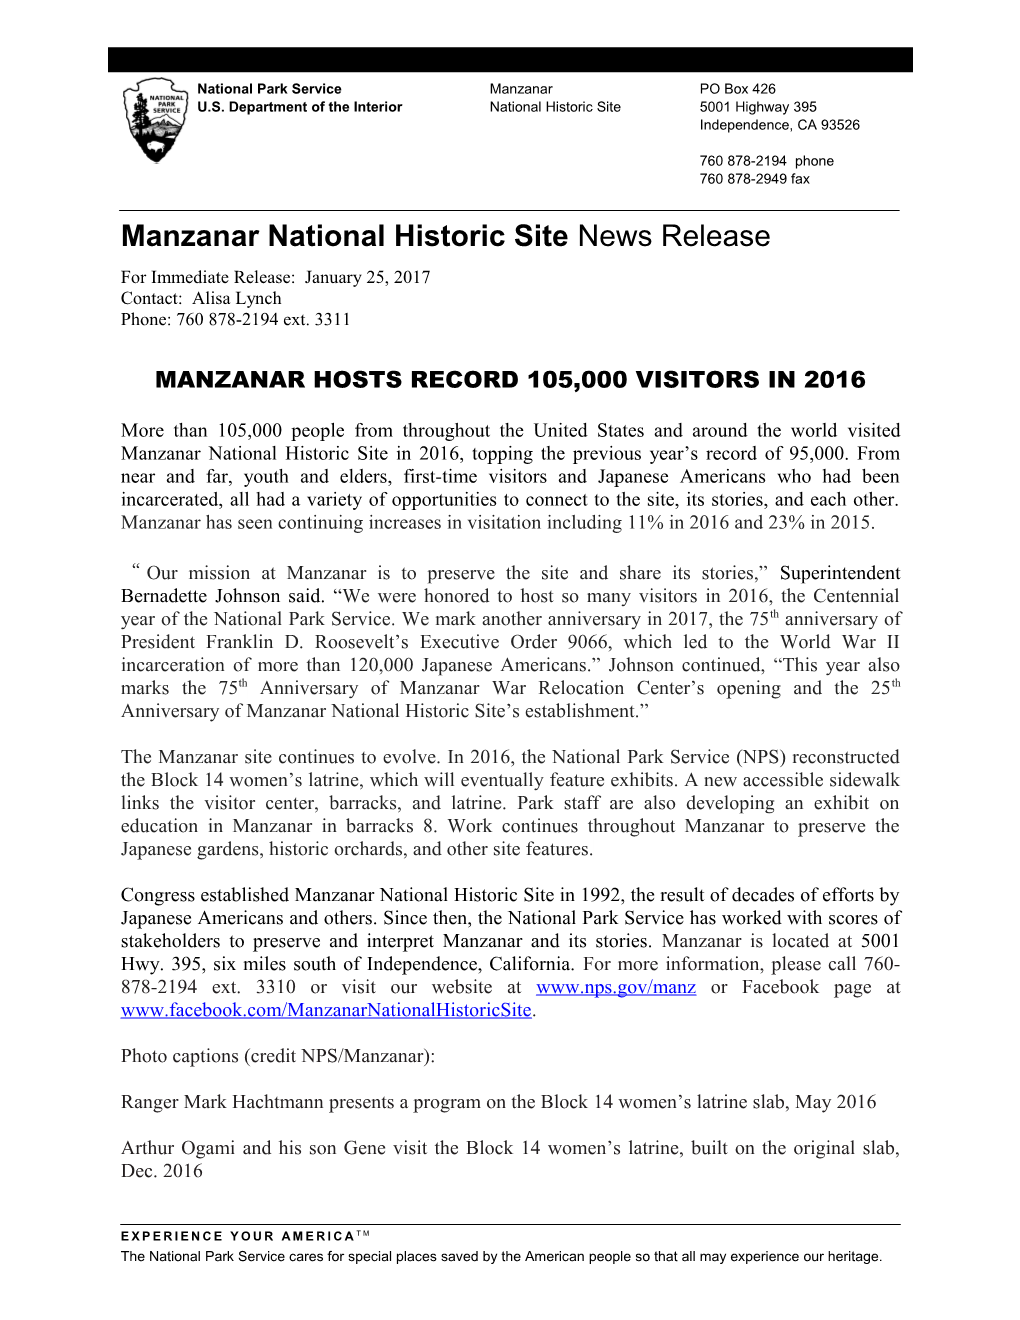 Manzanar National Historic Site News Release s1